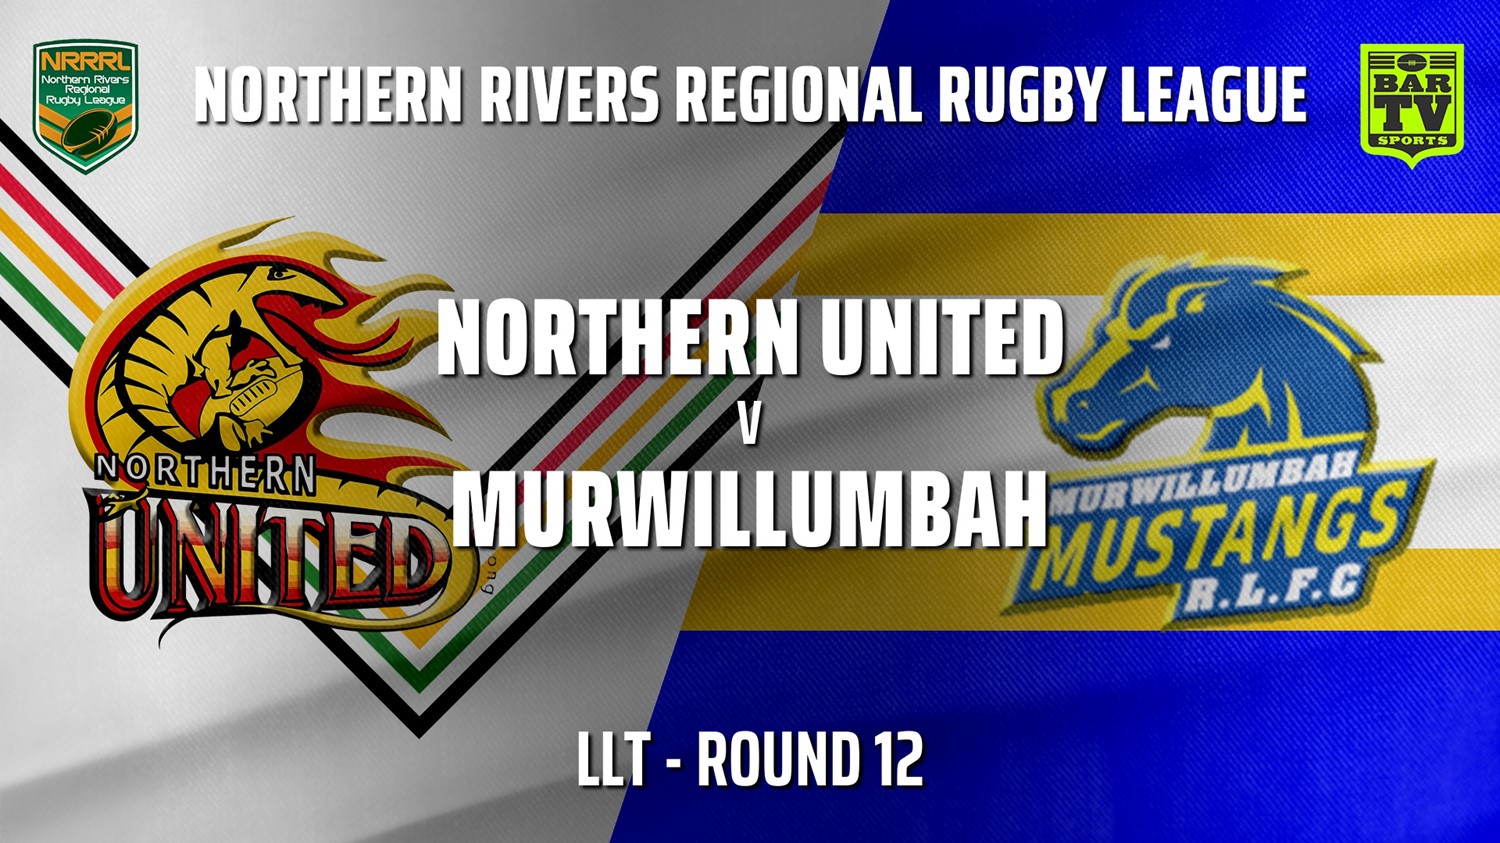 210724-Northern Rivers Round 12 - LLT - Northern United v Murwillumbah Mustangs Slate Image